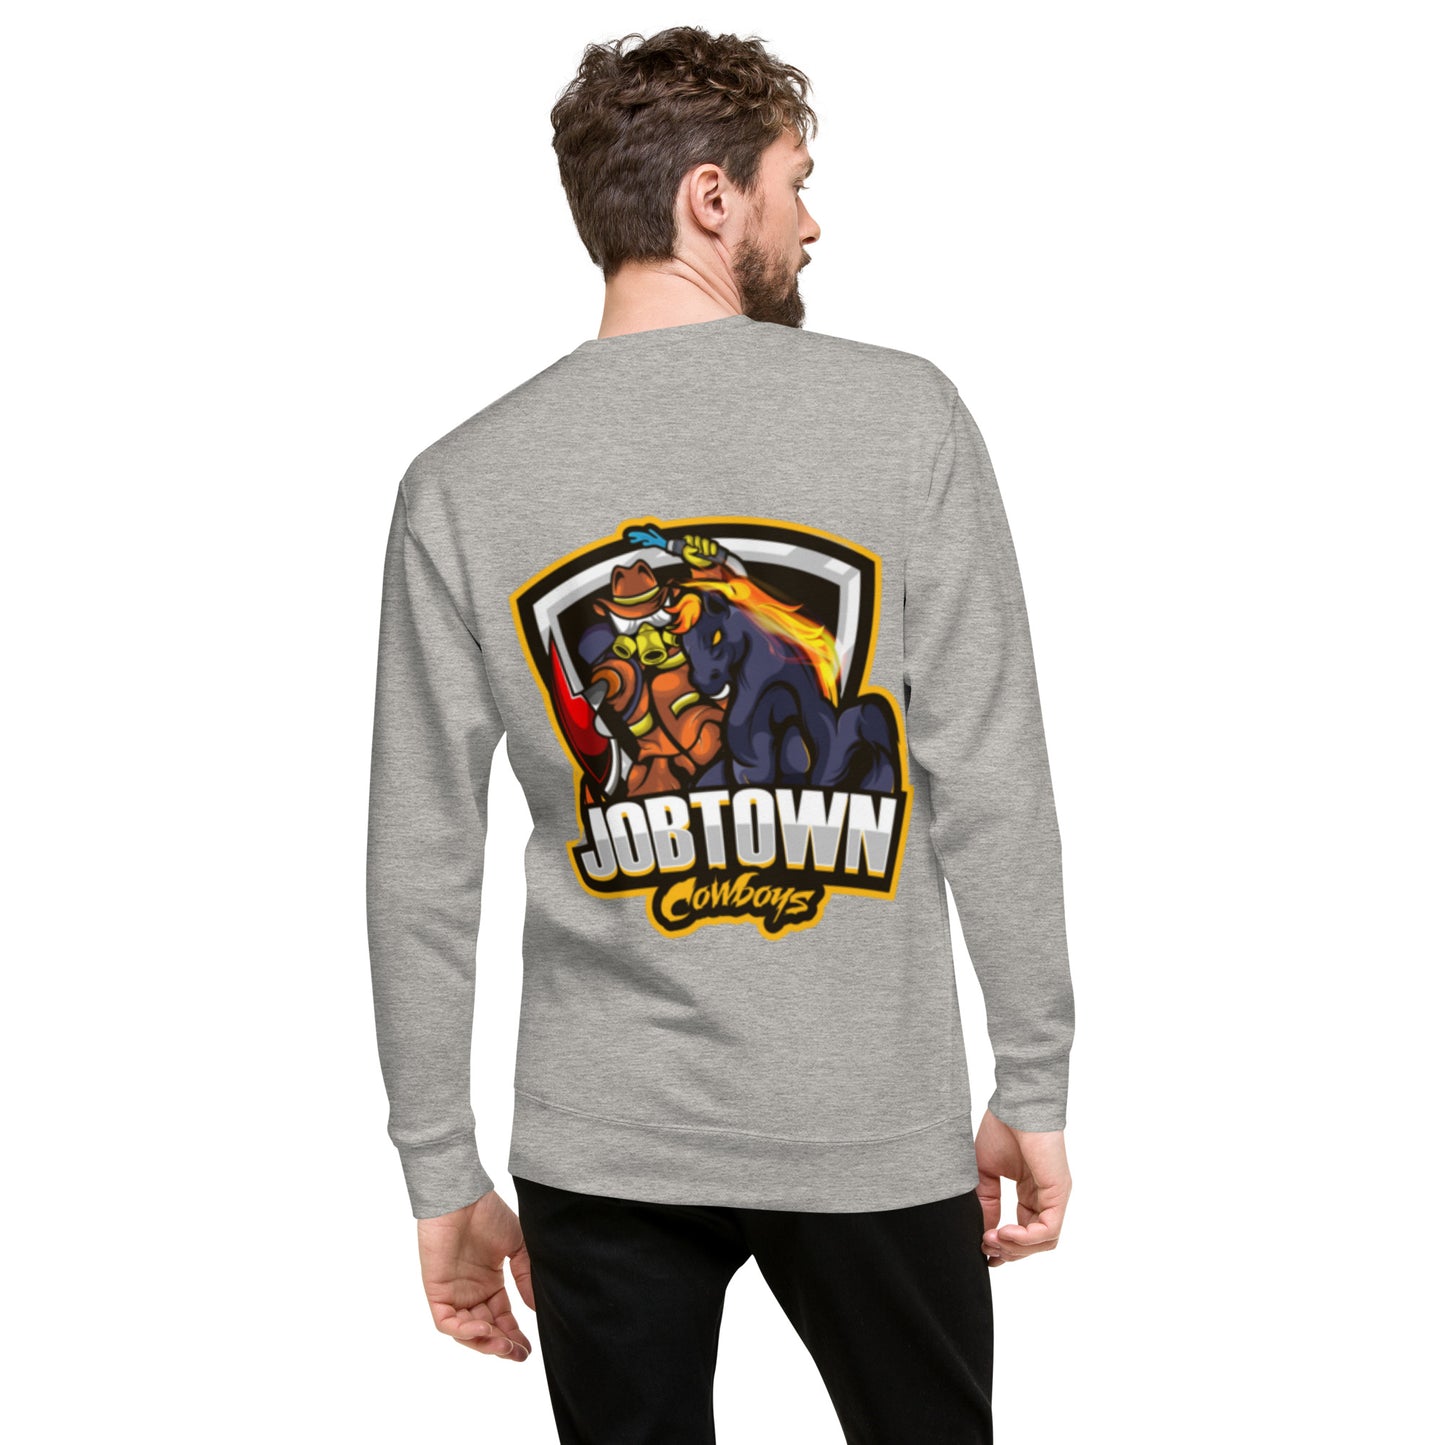 The Jobtown Cowboys Firefighter Premium Sweatshirt